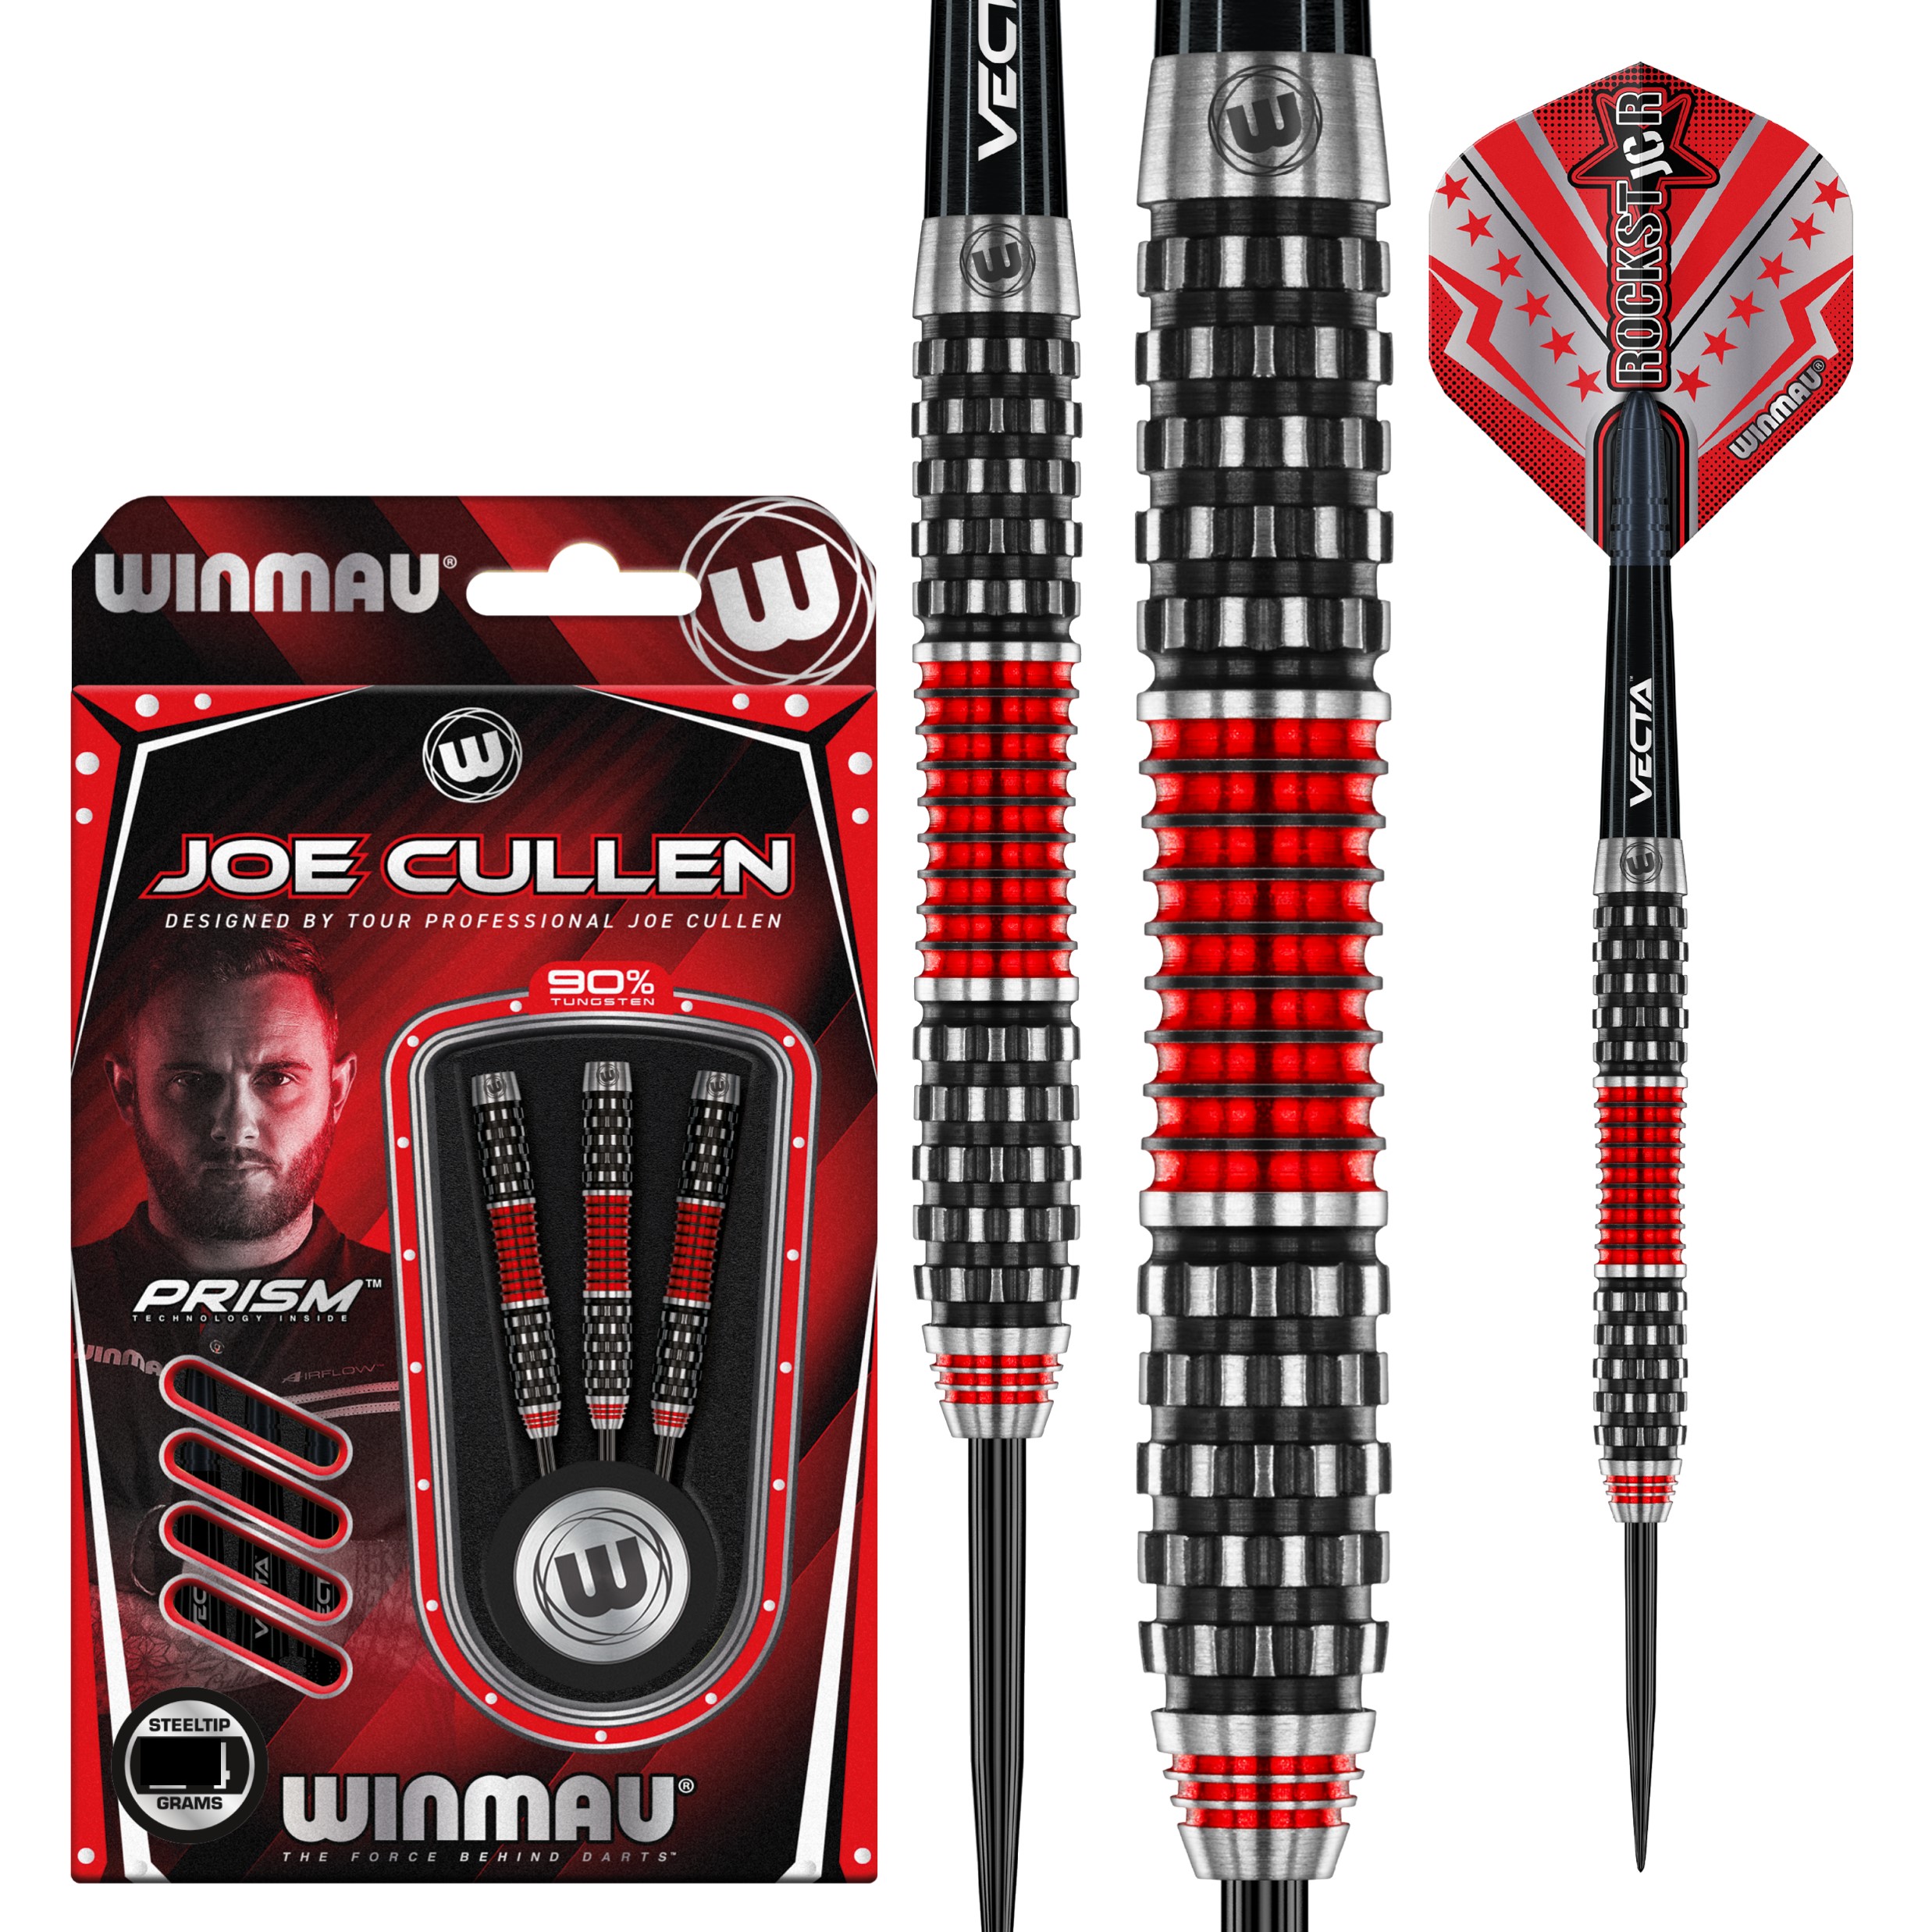 Joe Cullen Rockstar Series RS 1.0 Winmau - Steeldart